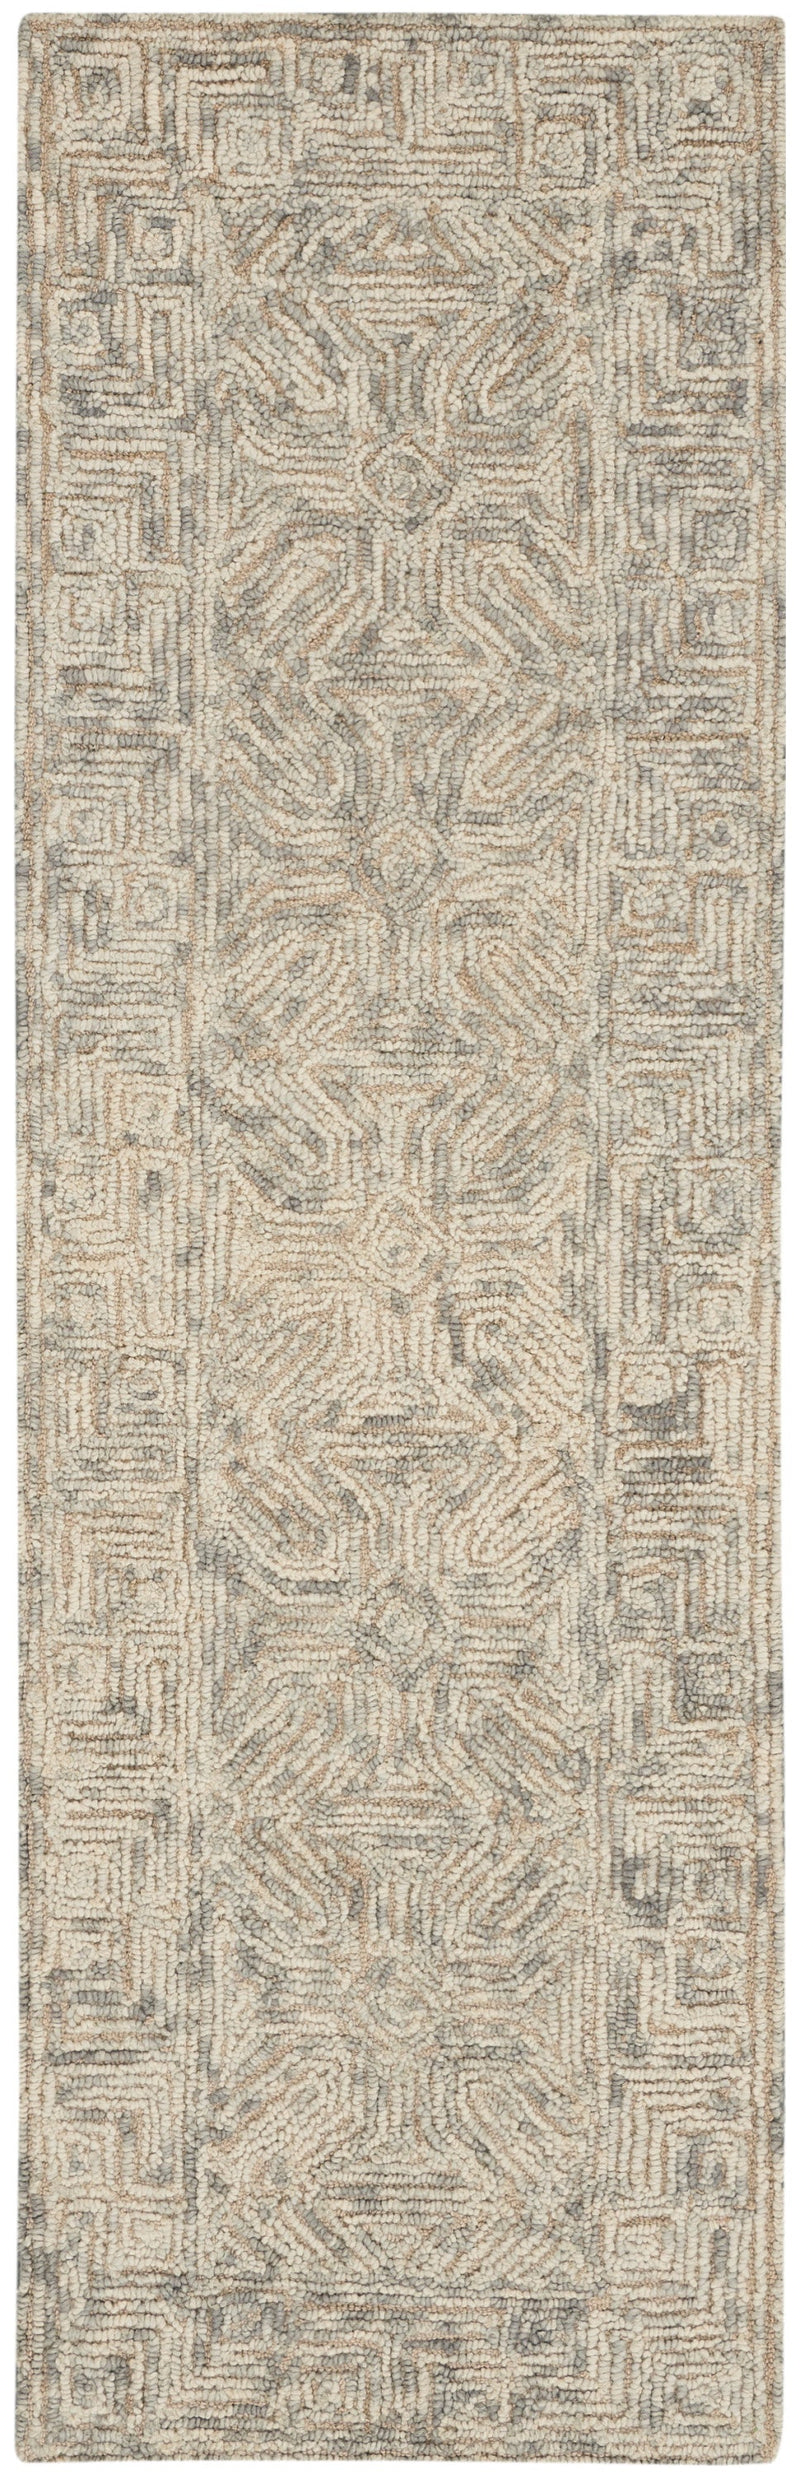 media image for colorado handmade beige grey rug by nourison 99446790316 redo 2 277